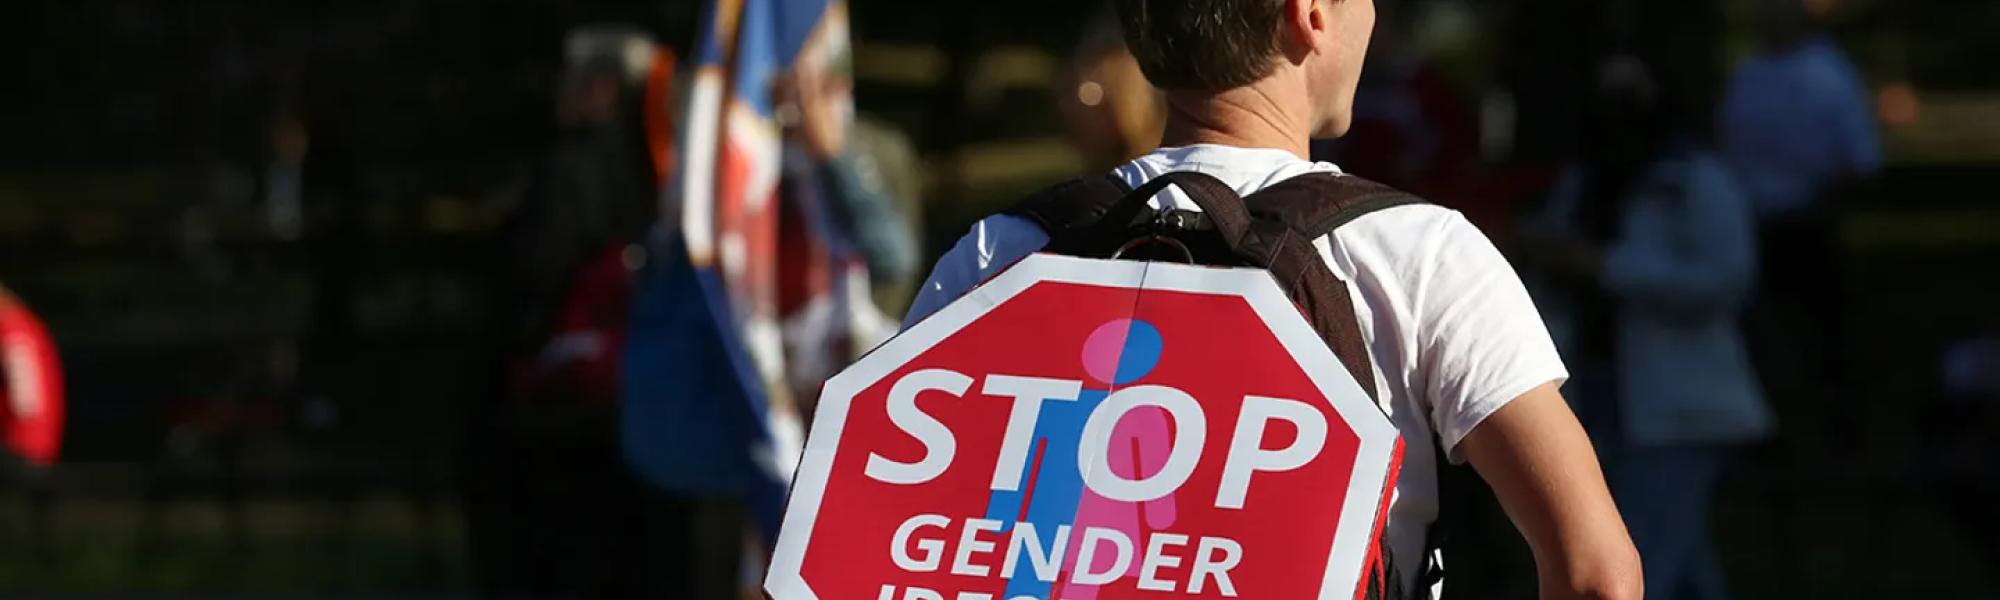 Stop gender ideology